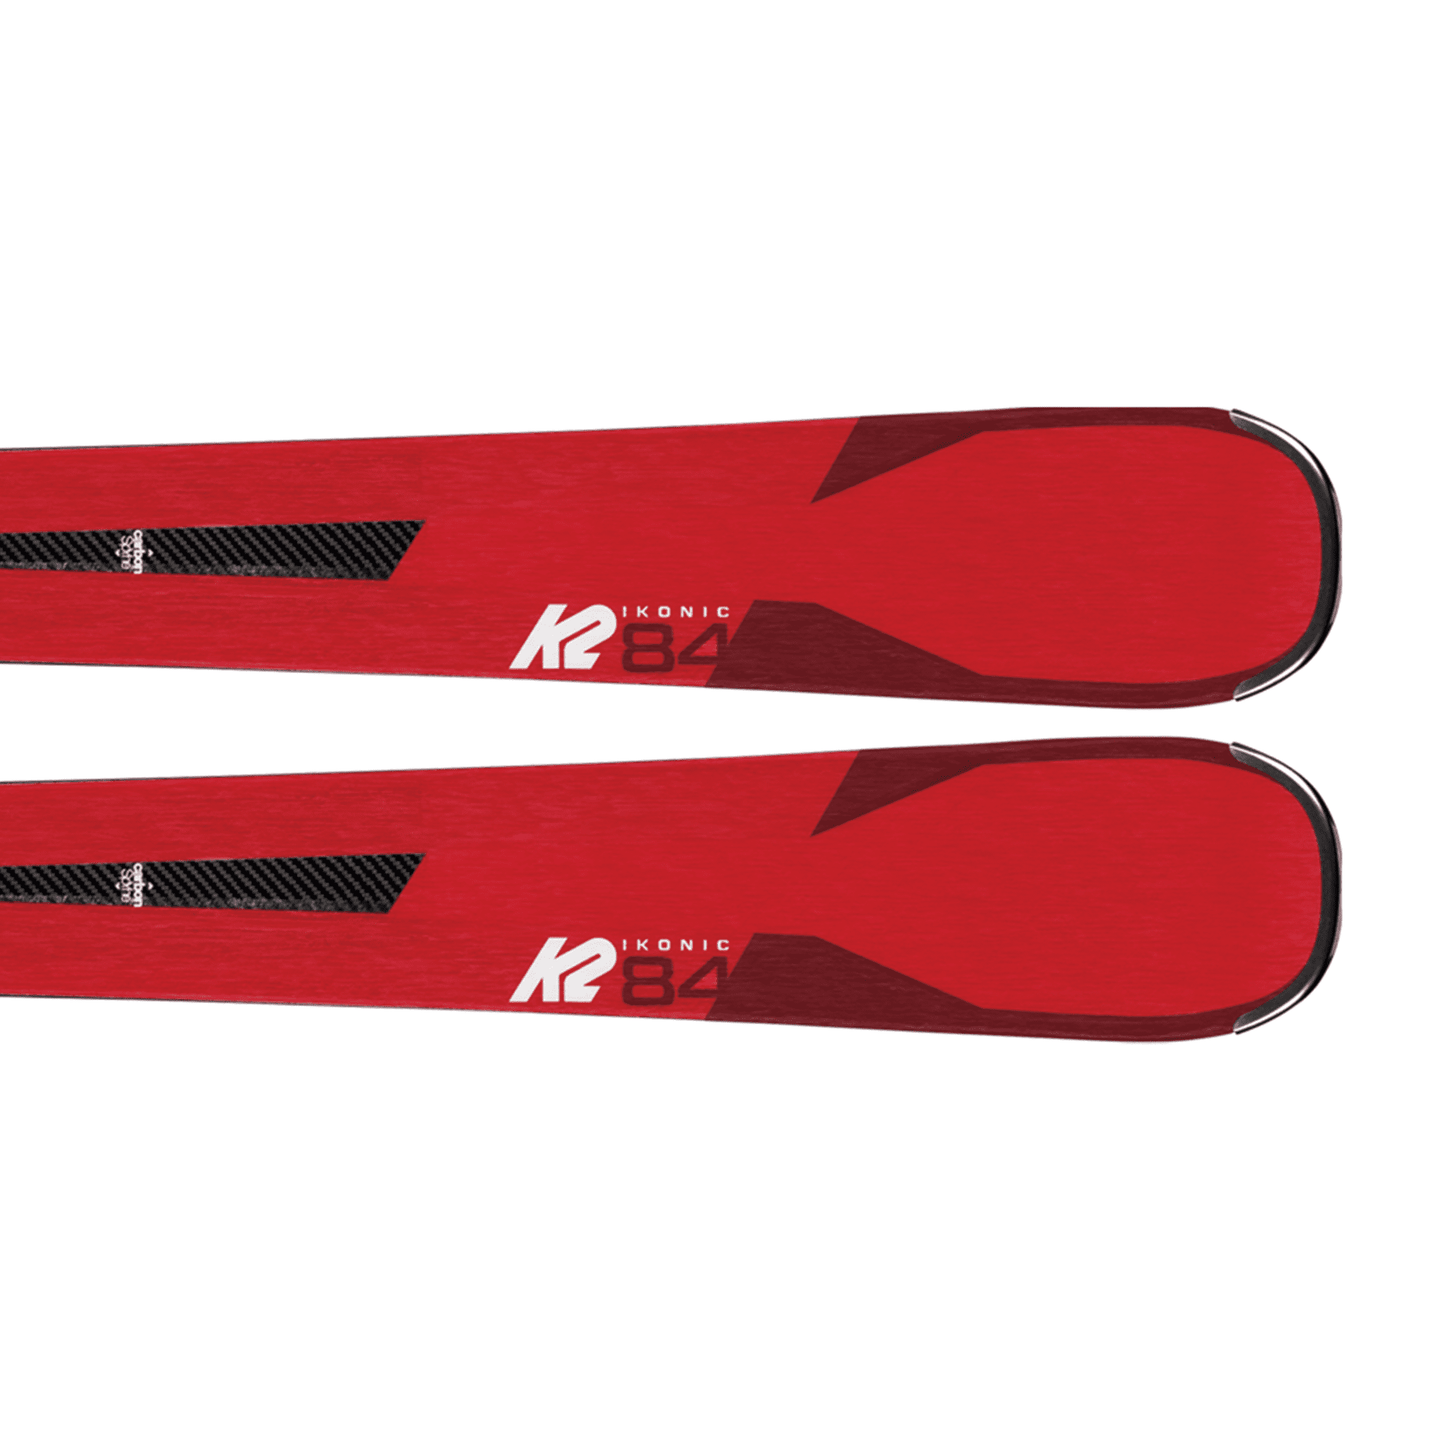 K2 iKonic 84 Ski's Inc Marker M3 12 Bindings (2020)